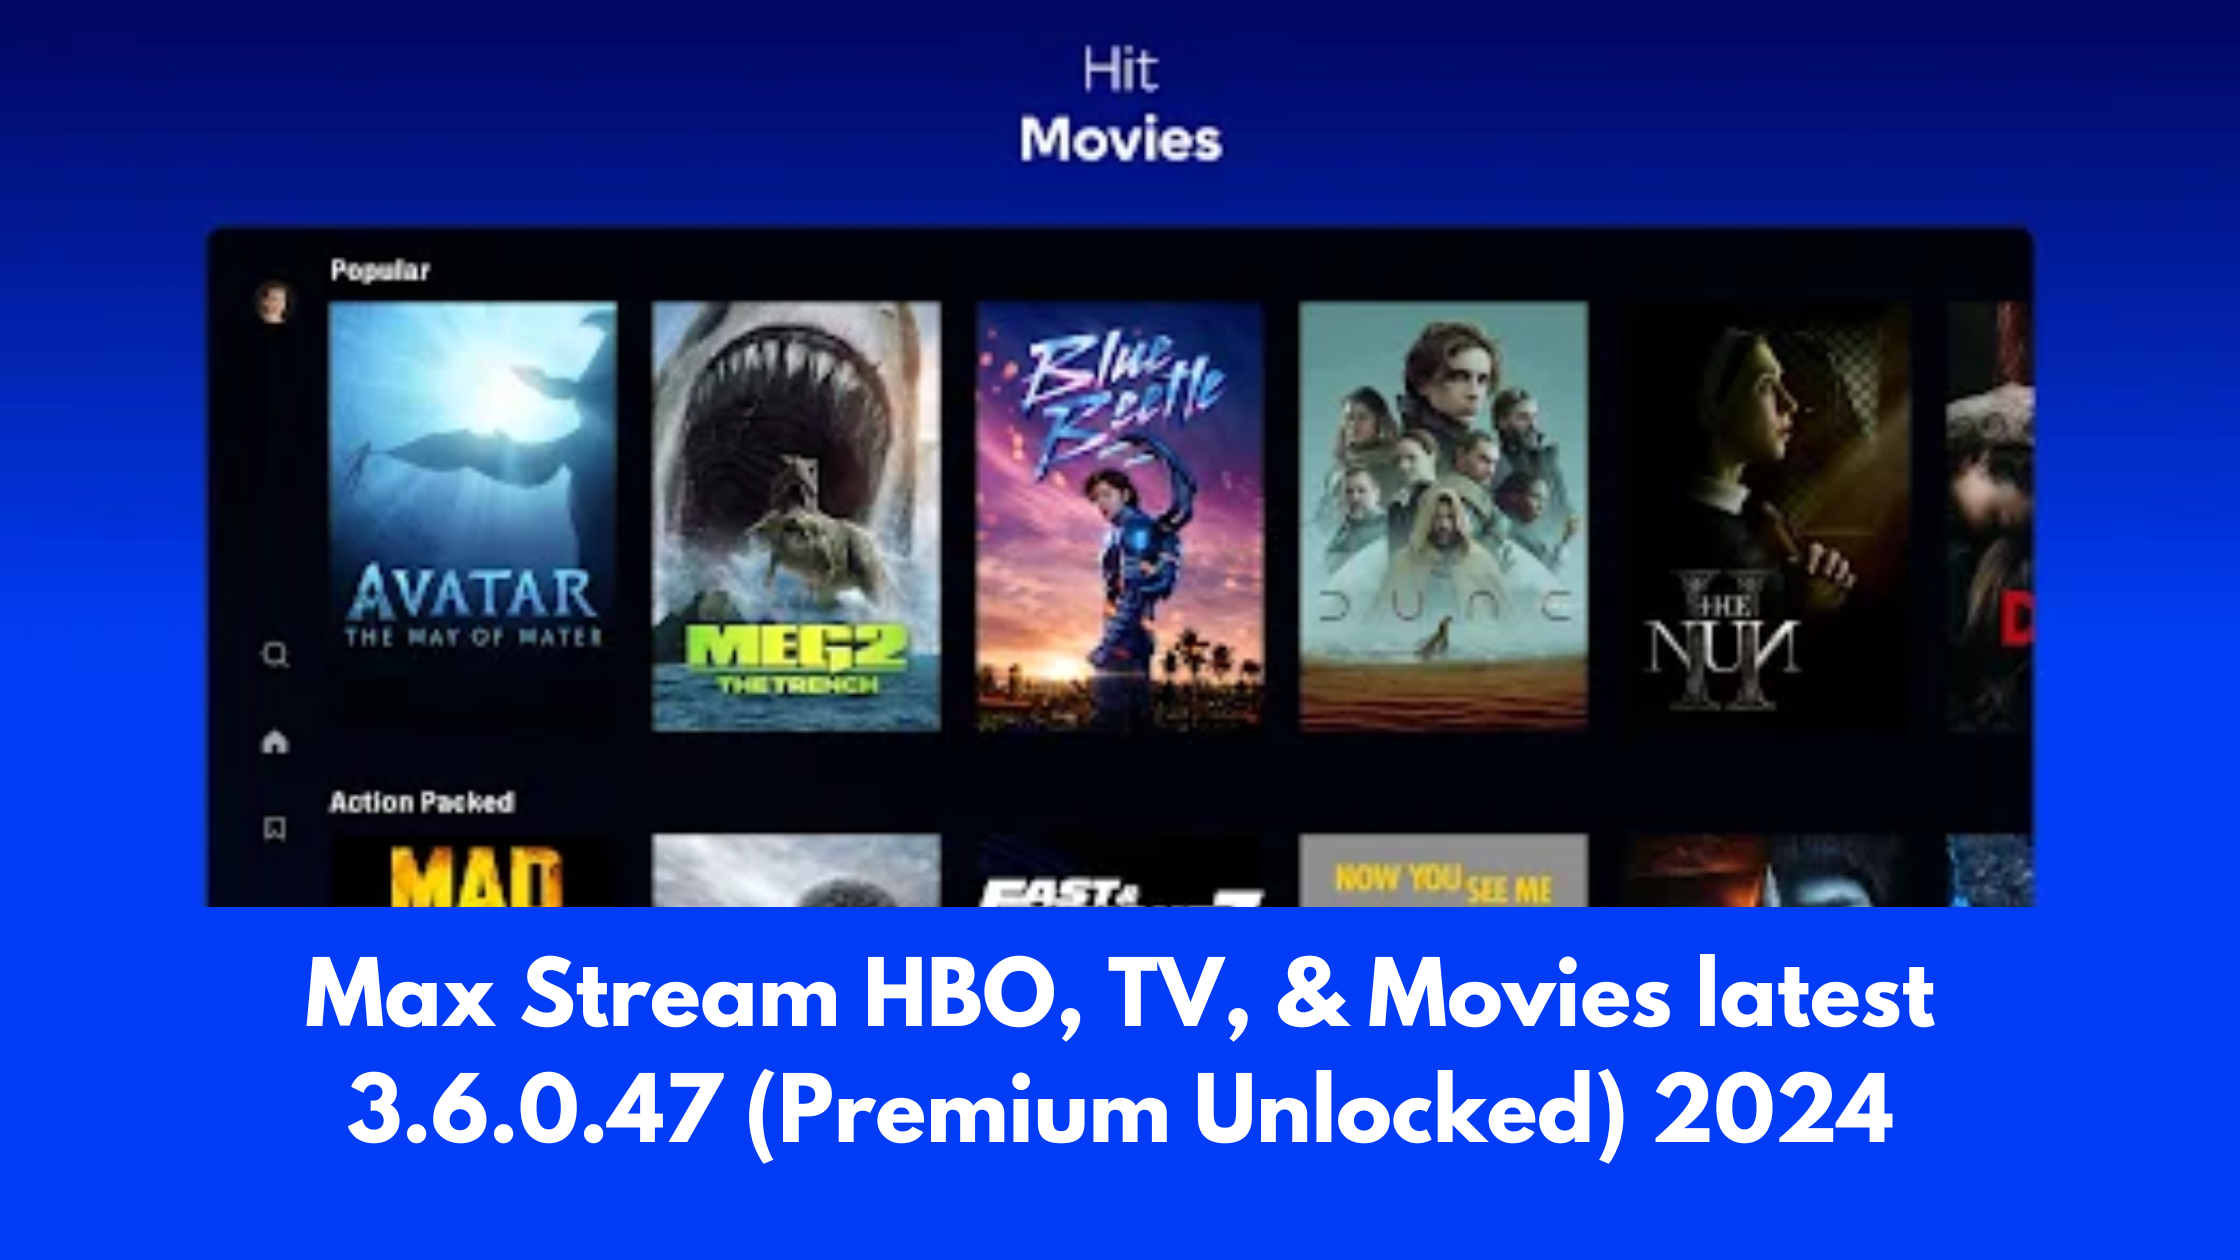 Max Stream HBO, TV, & Movies latest 3.6.0.47 (Premium Unlocked) 2024,